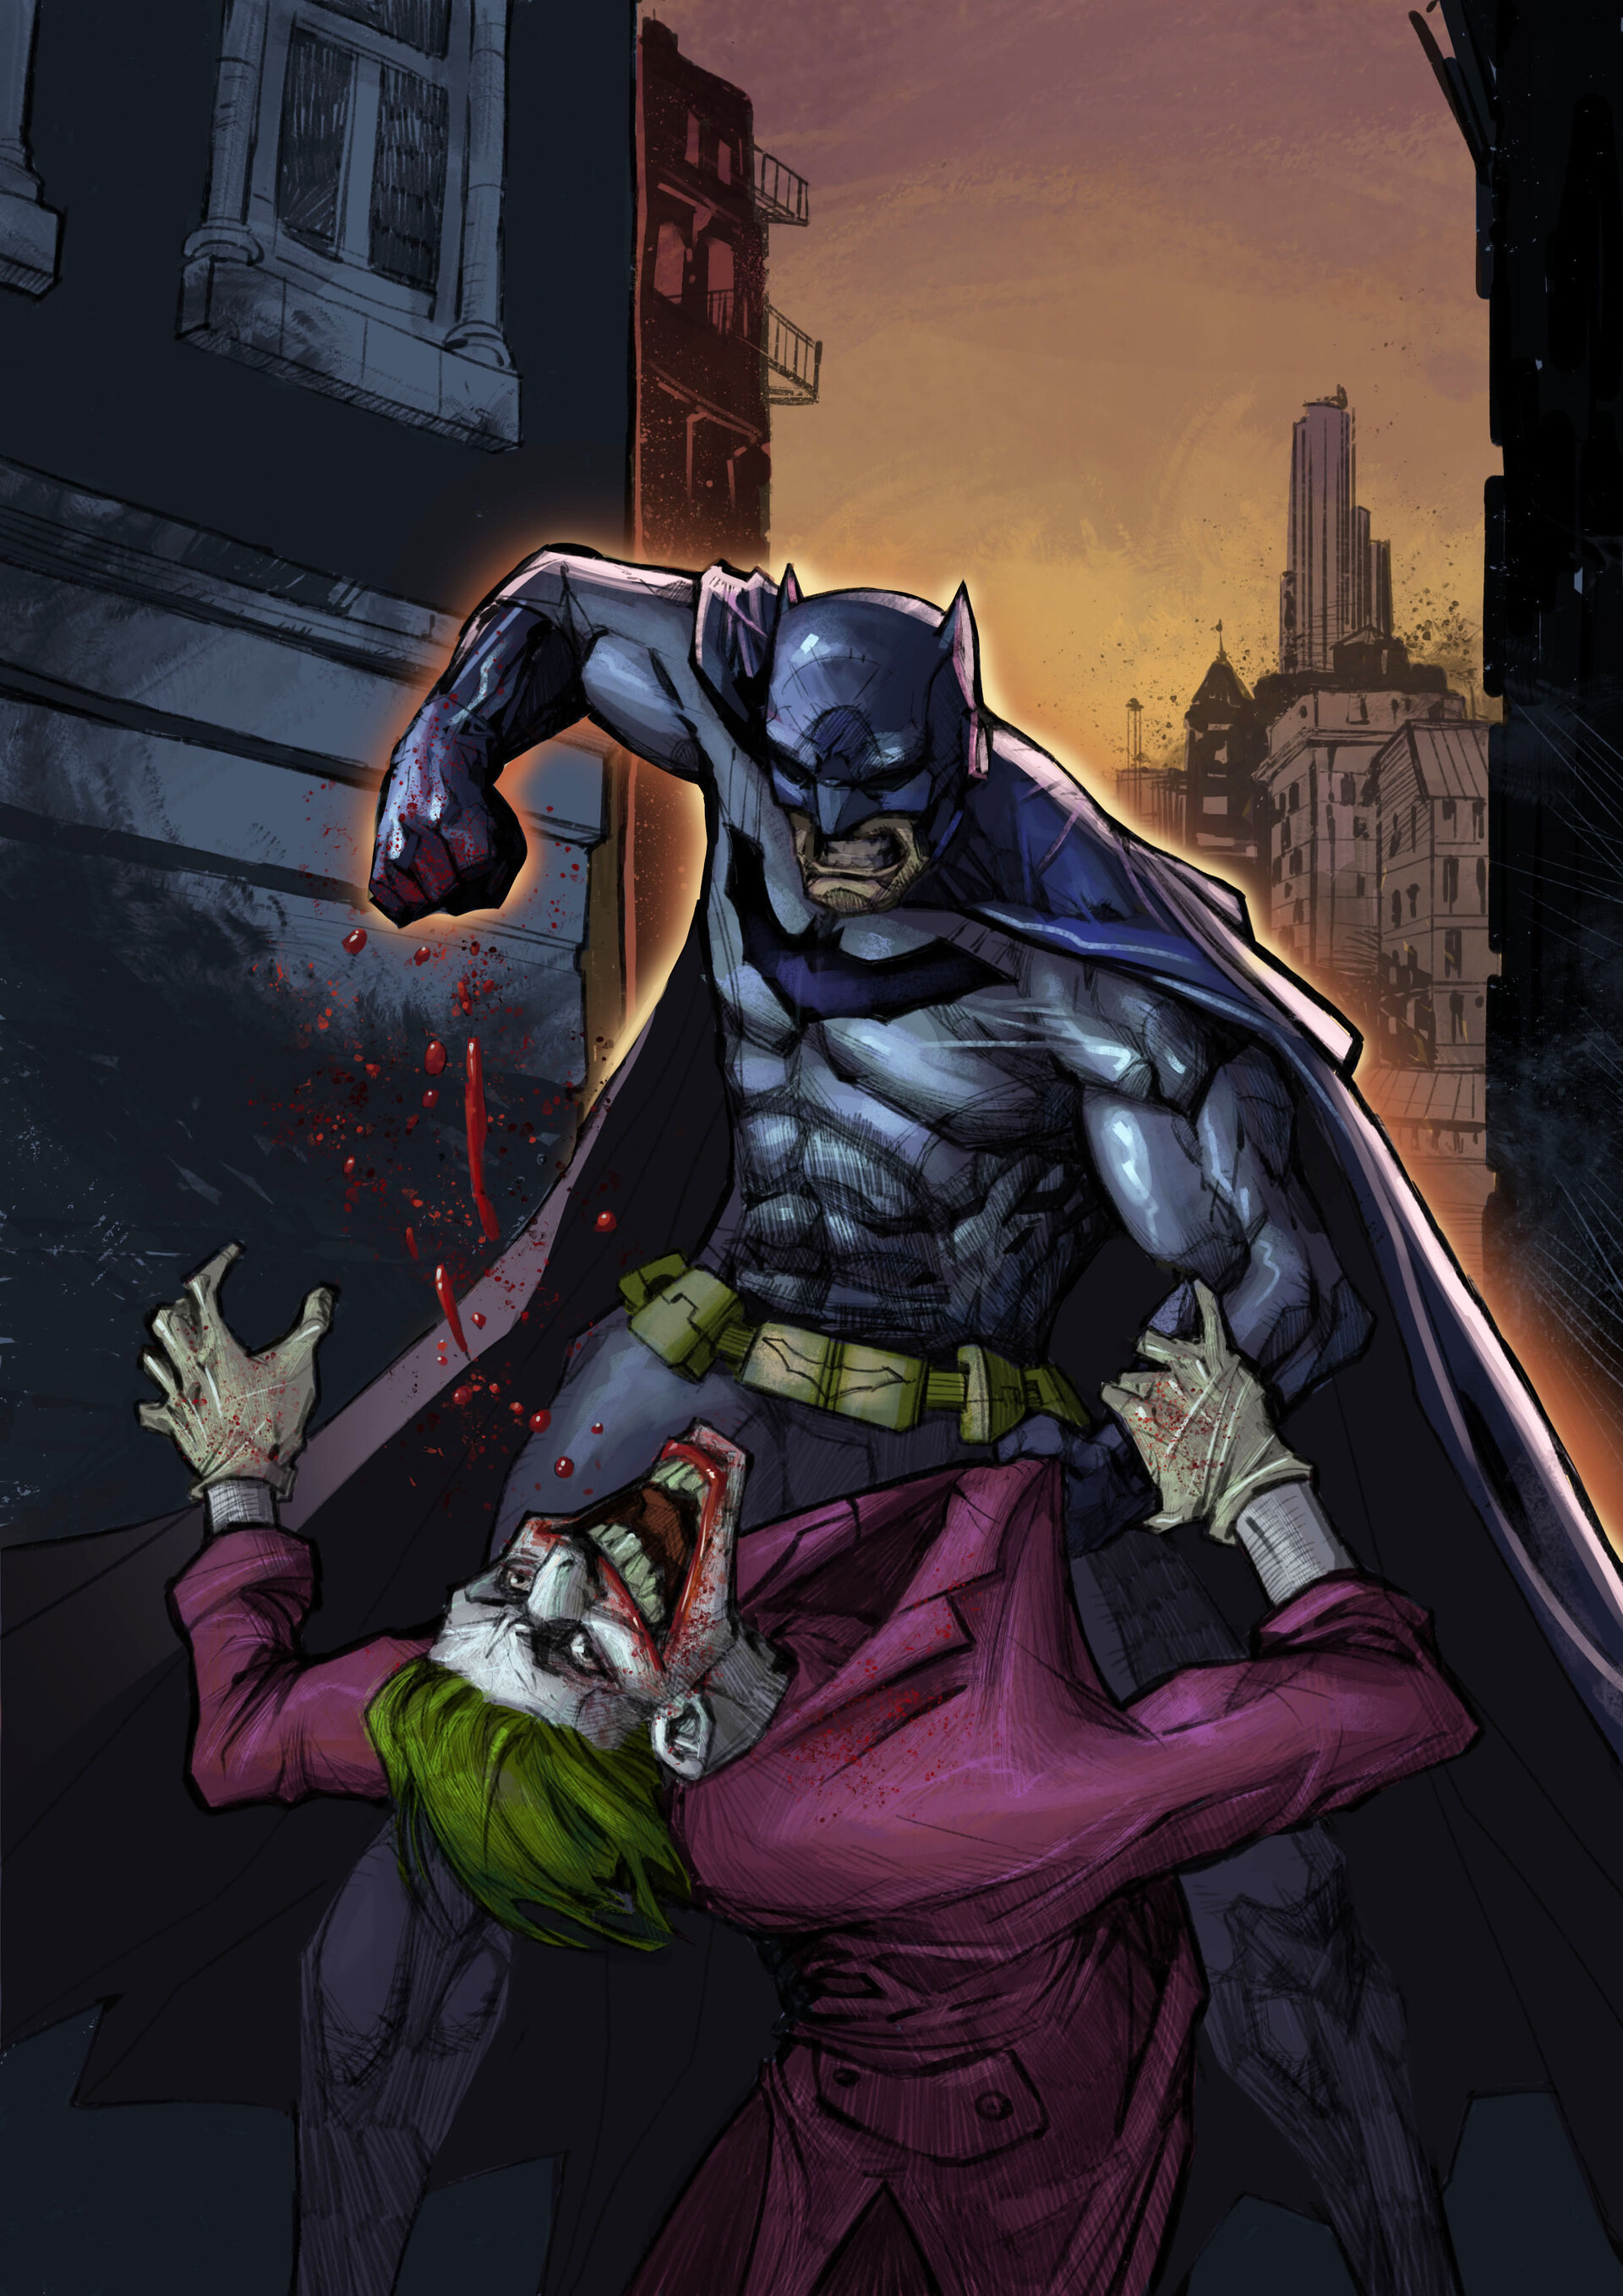 ArtStation - Batman vs Joker